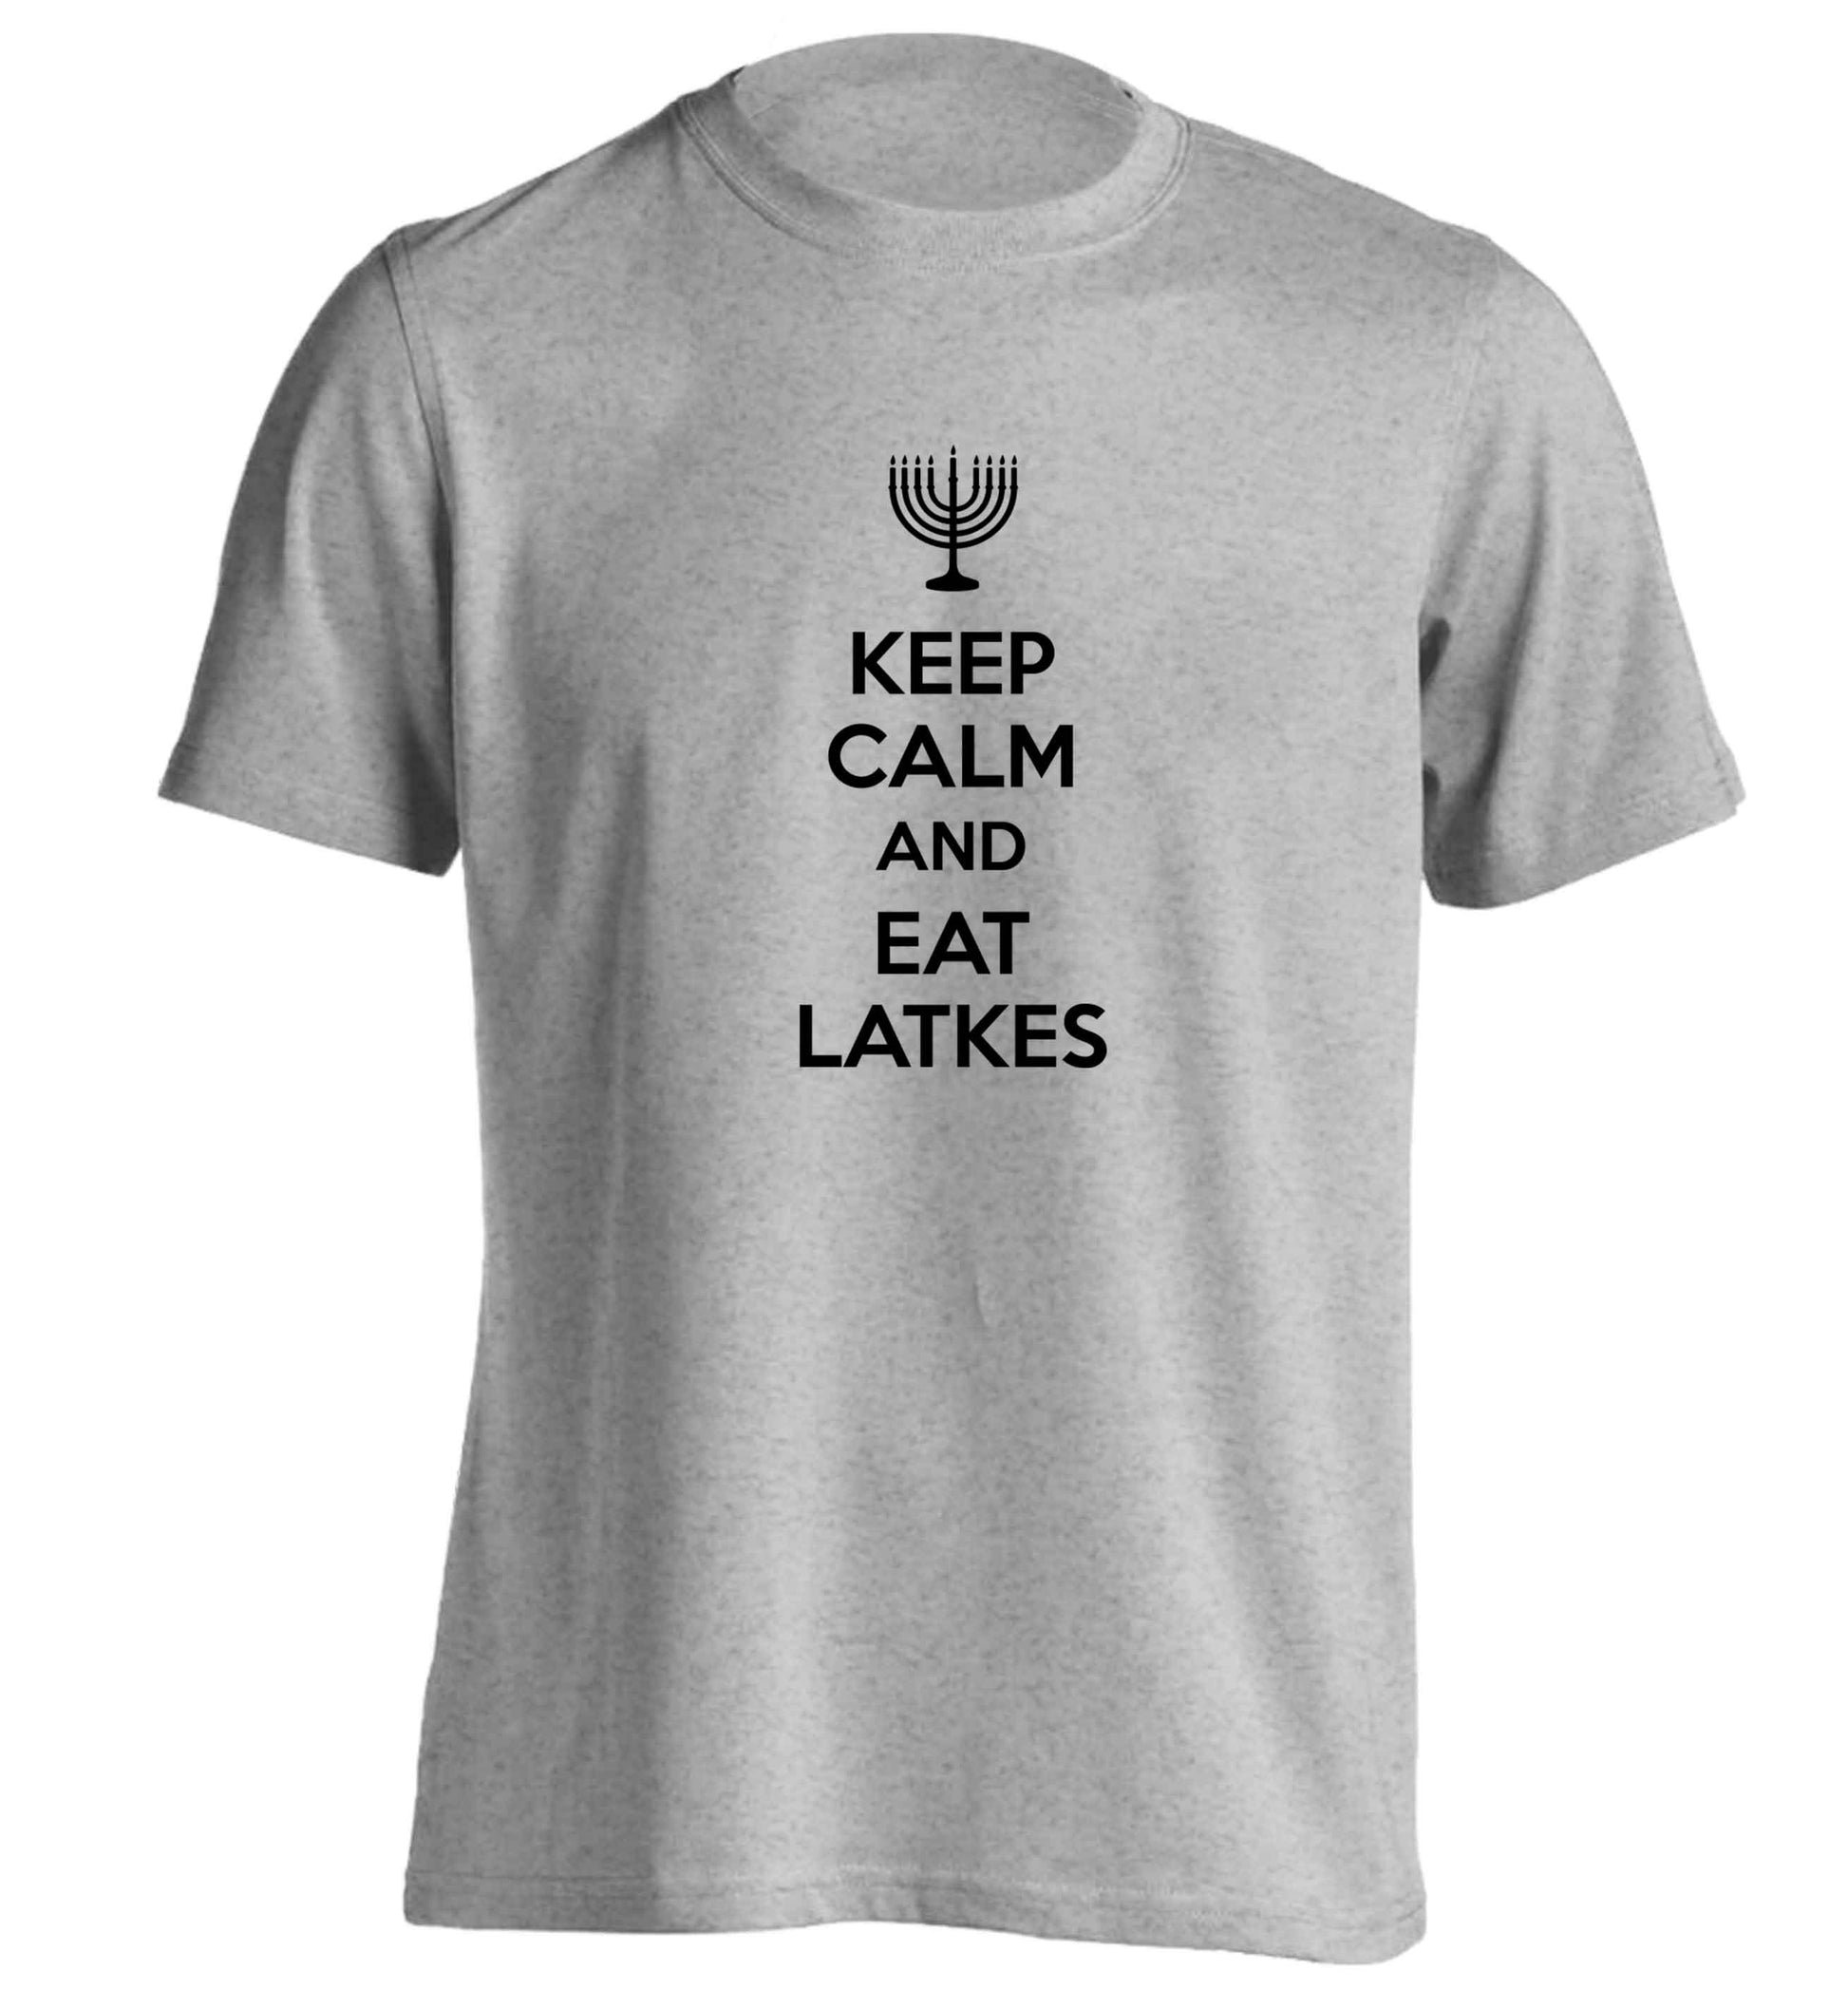 Keep calm and eat latkes adults unisex grey Tshirt 2XL